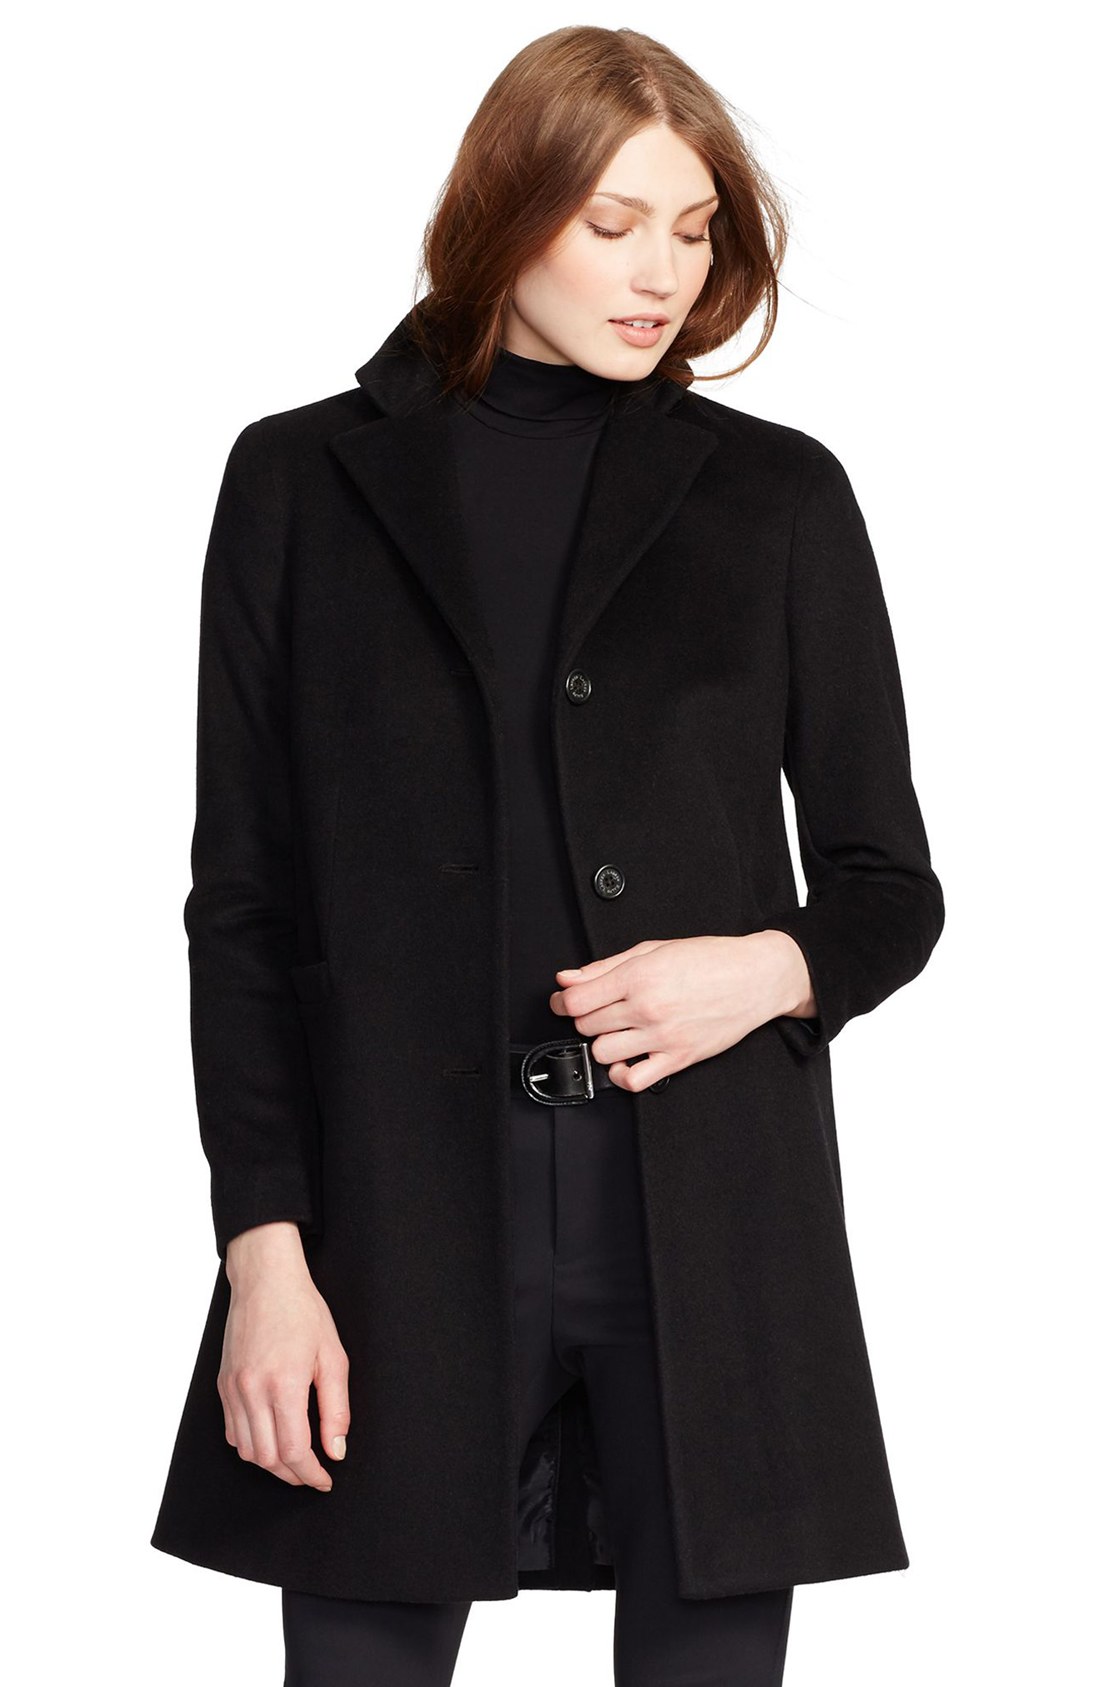 Black Coat Outfit Ideas